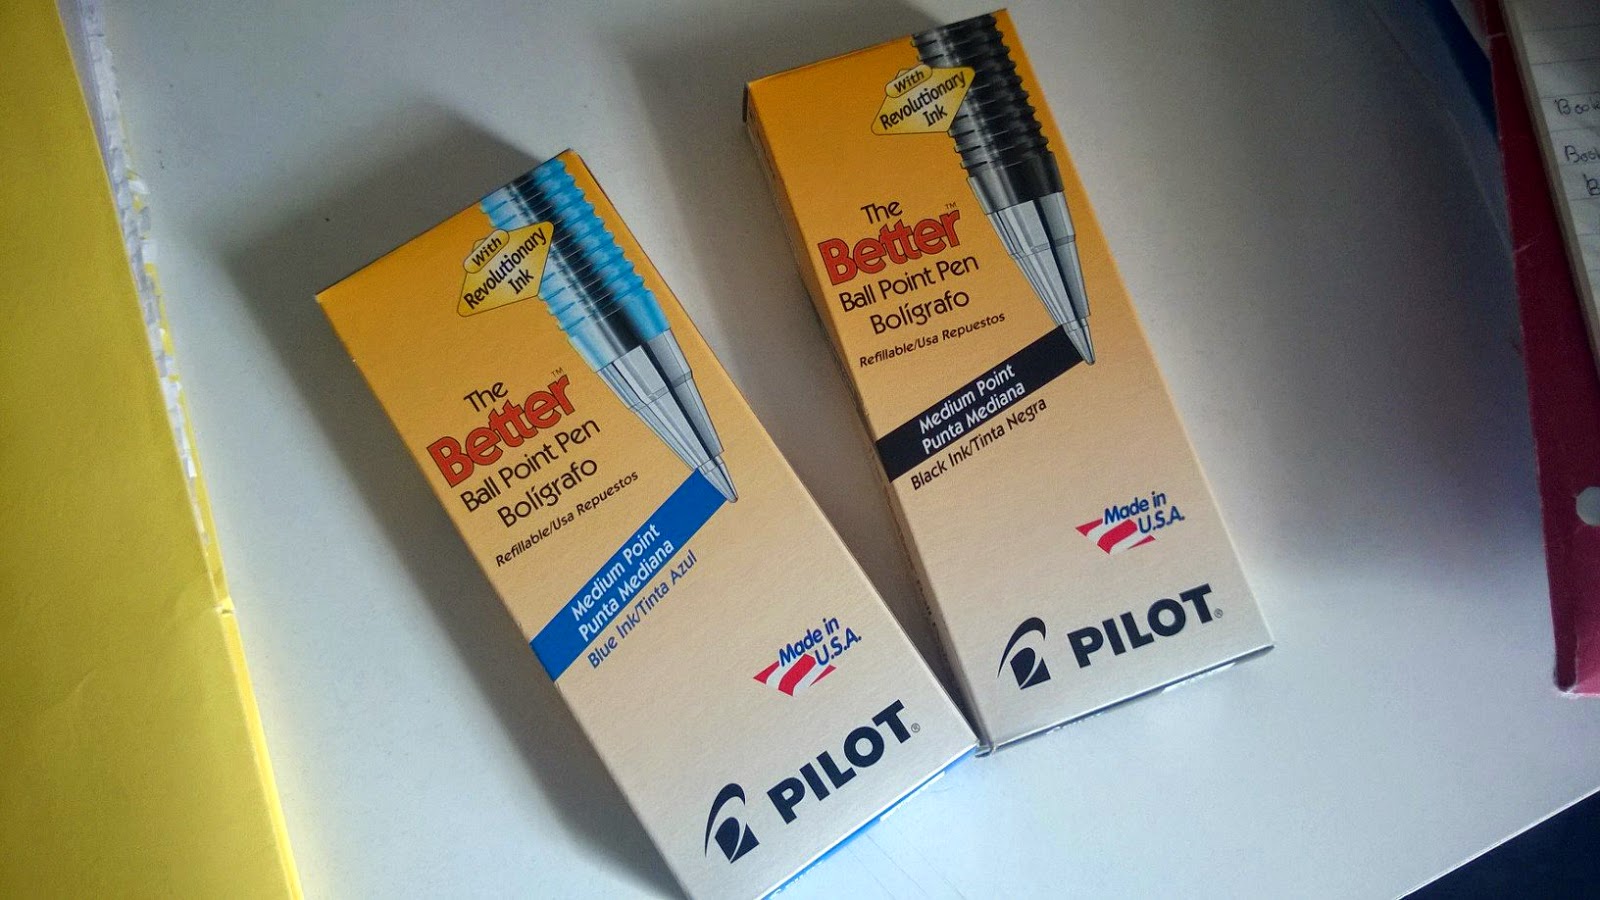 Pilot pens in boxes